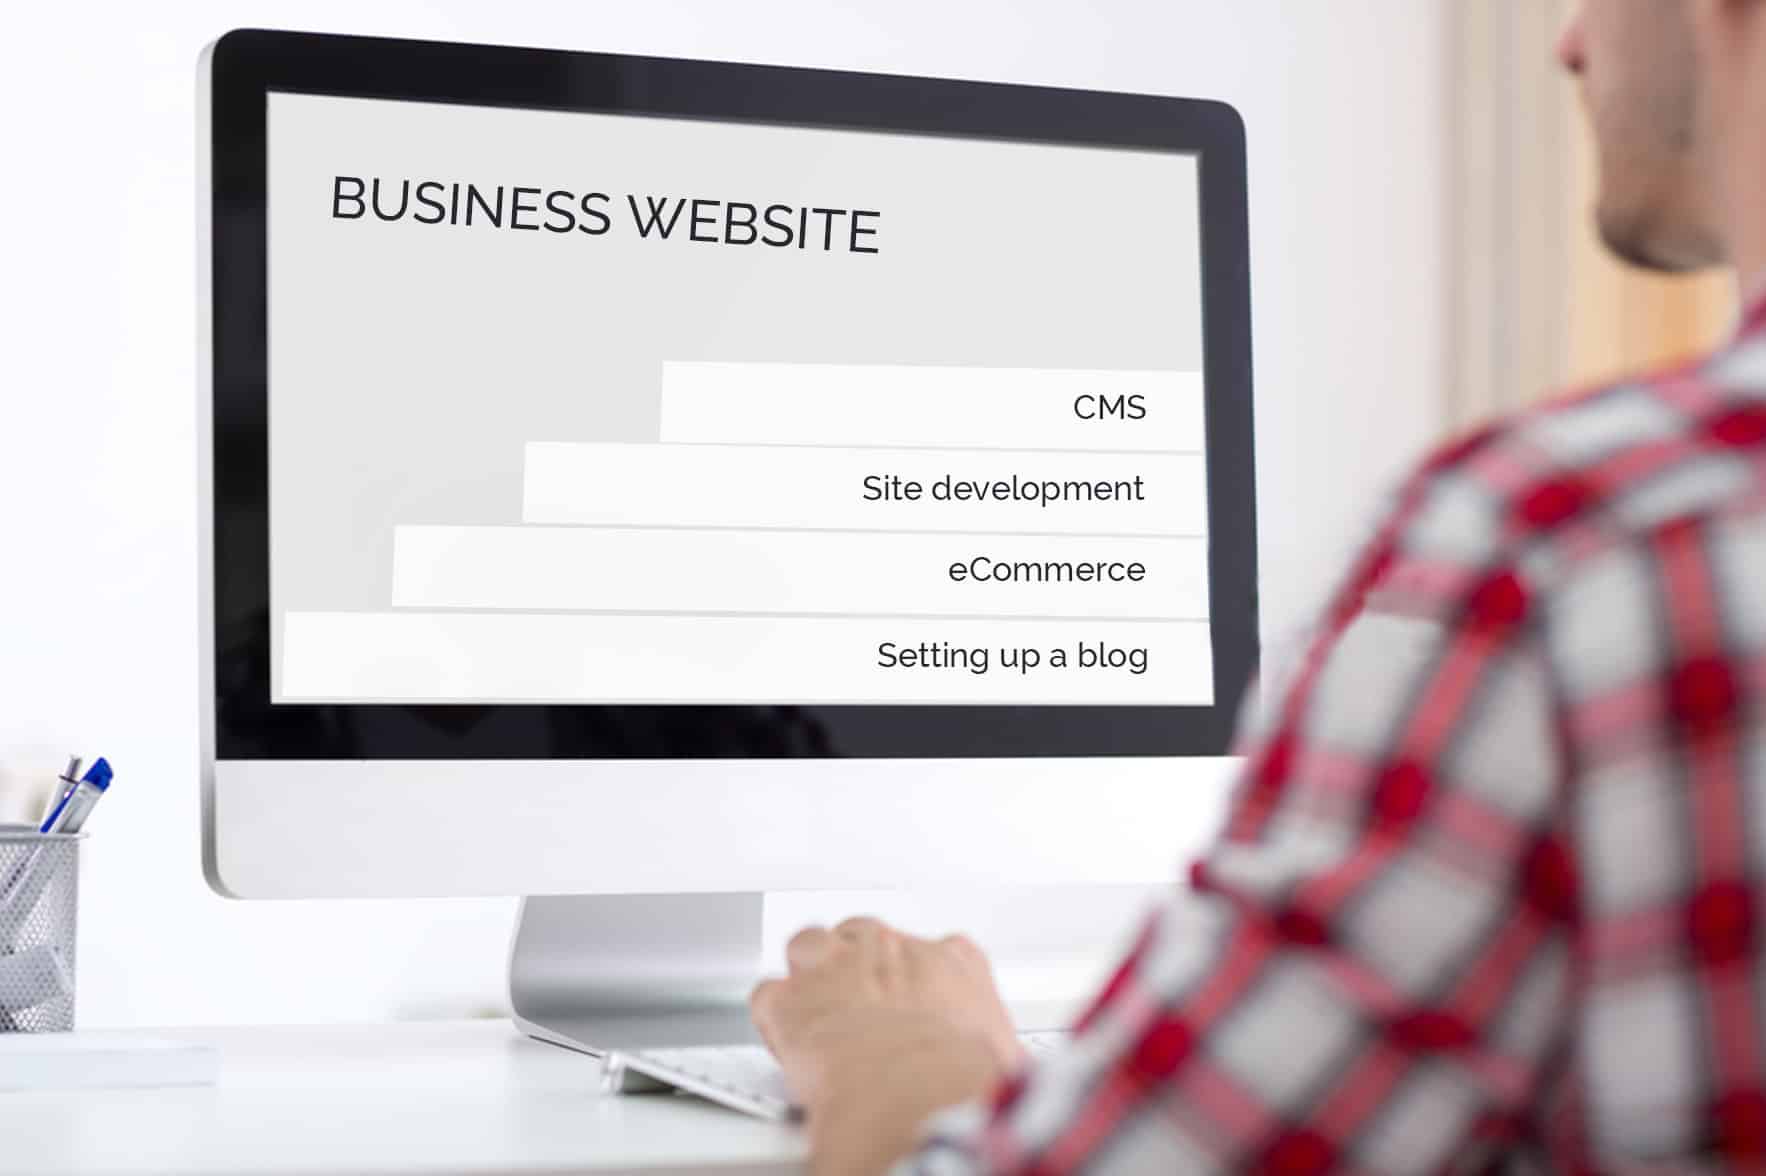 Businesses website